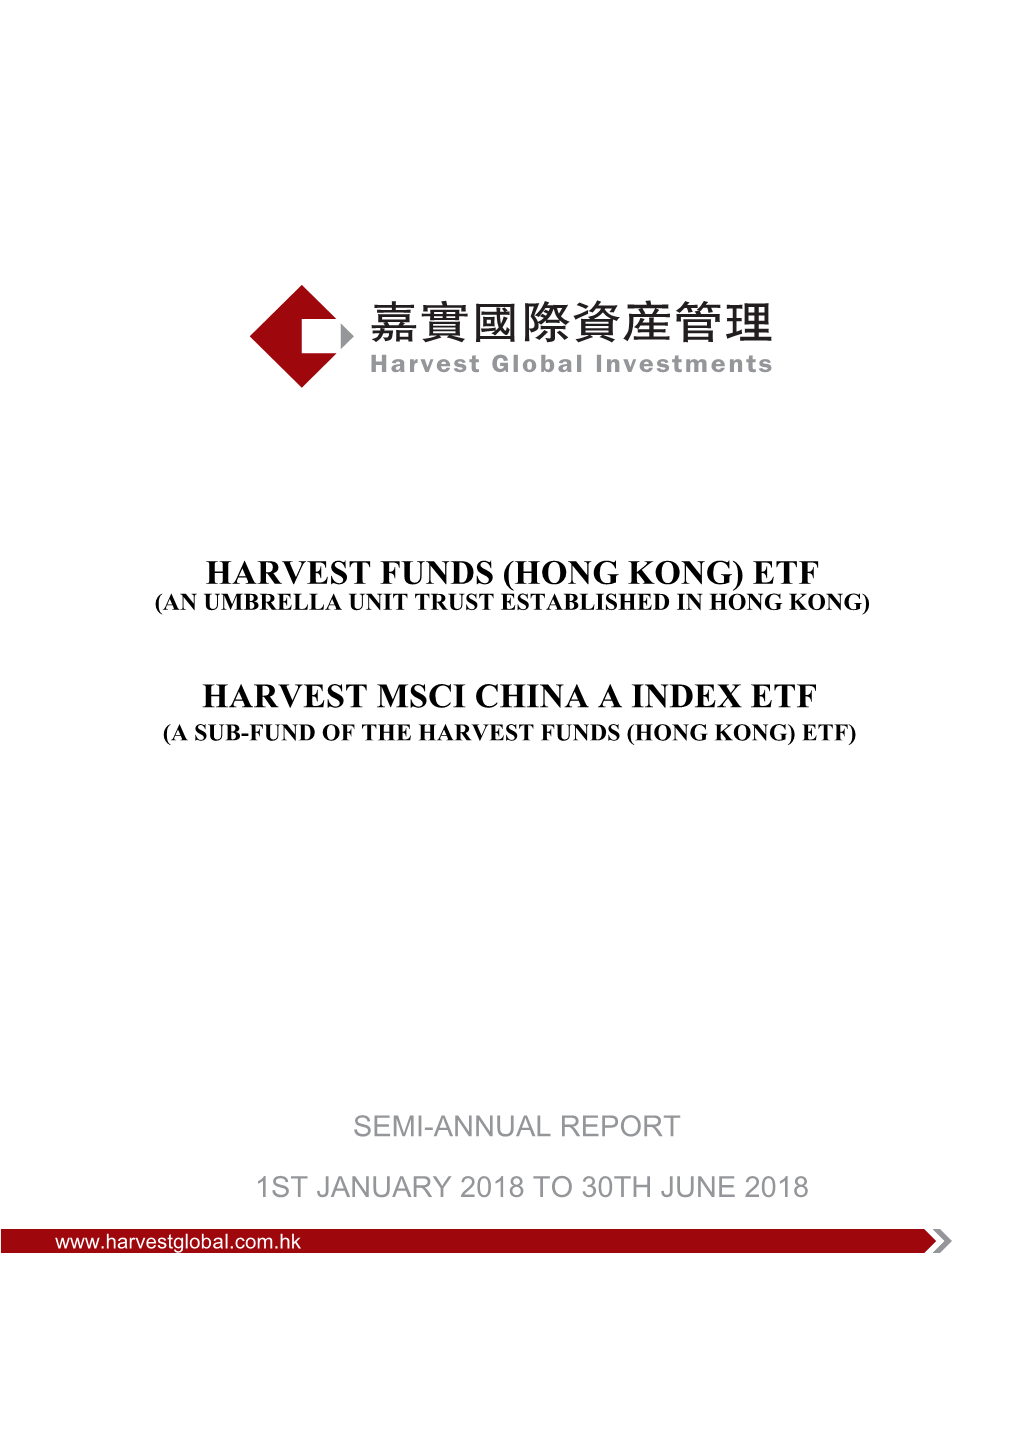 Harvest Funds (Hong Kong) Etf (An Umbrella Unit Trust Established in Hong Kong)